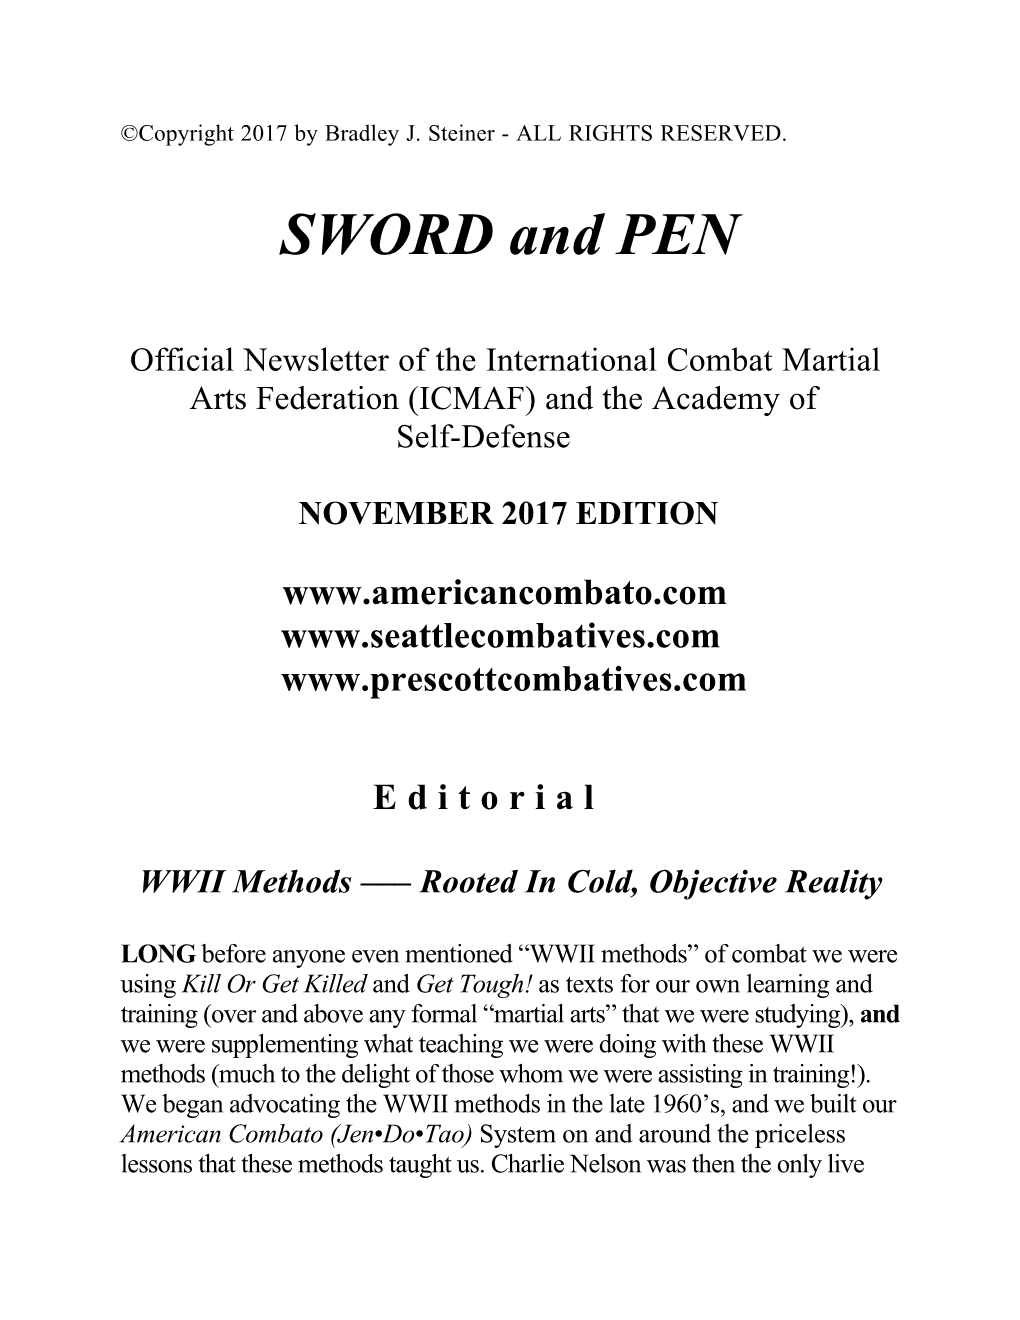 November 2017 – Sword And